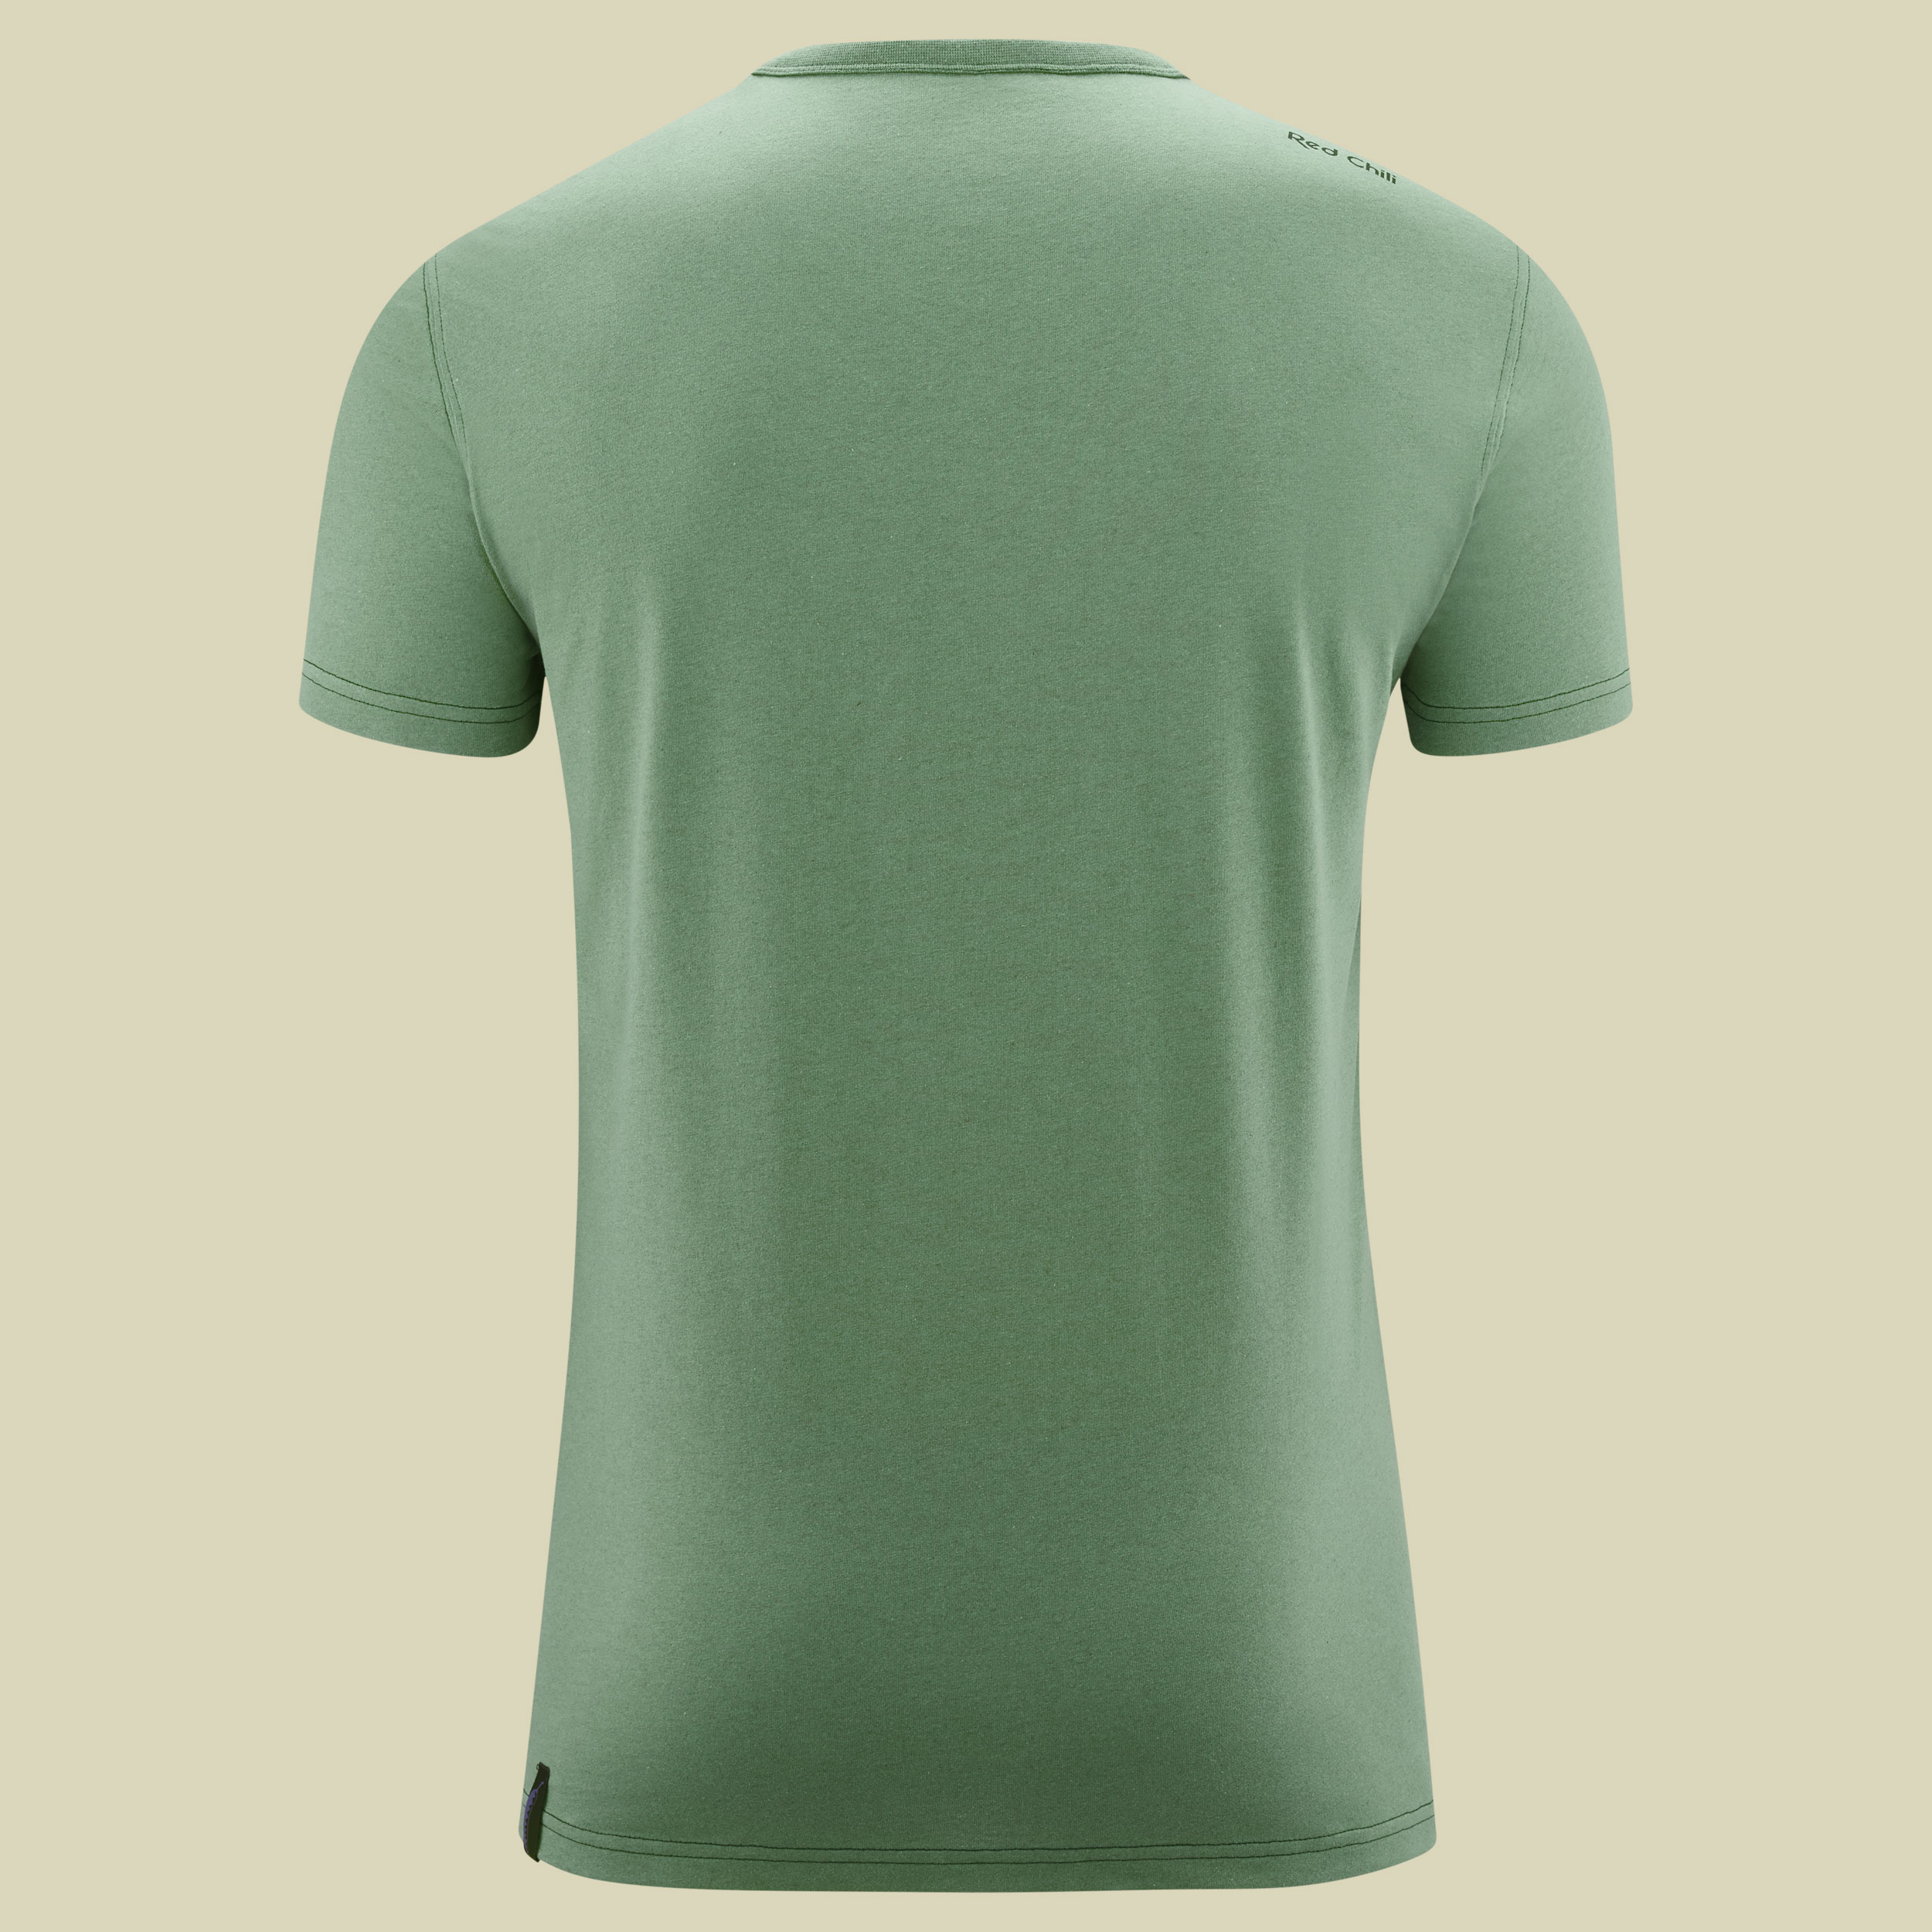 Heso T-Shirt III Men grün XL - kale